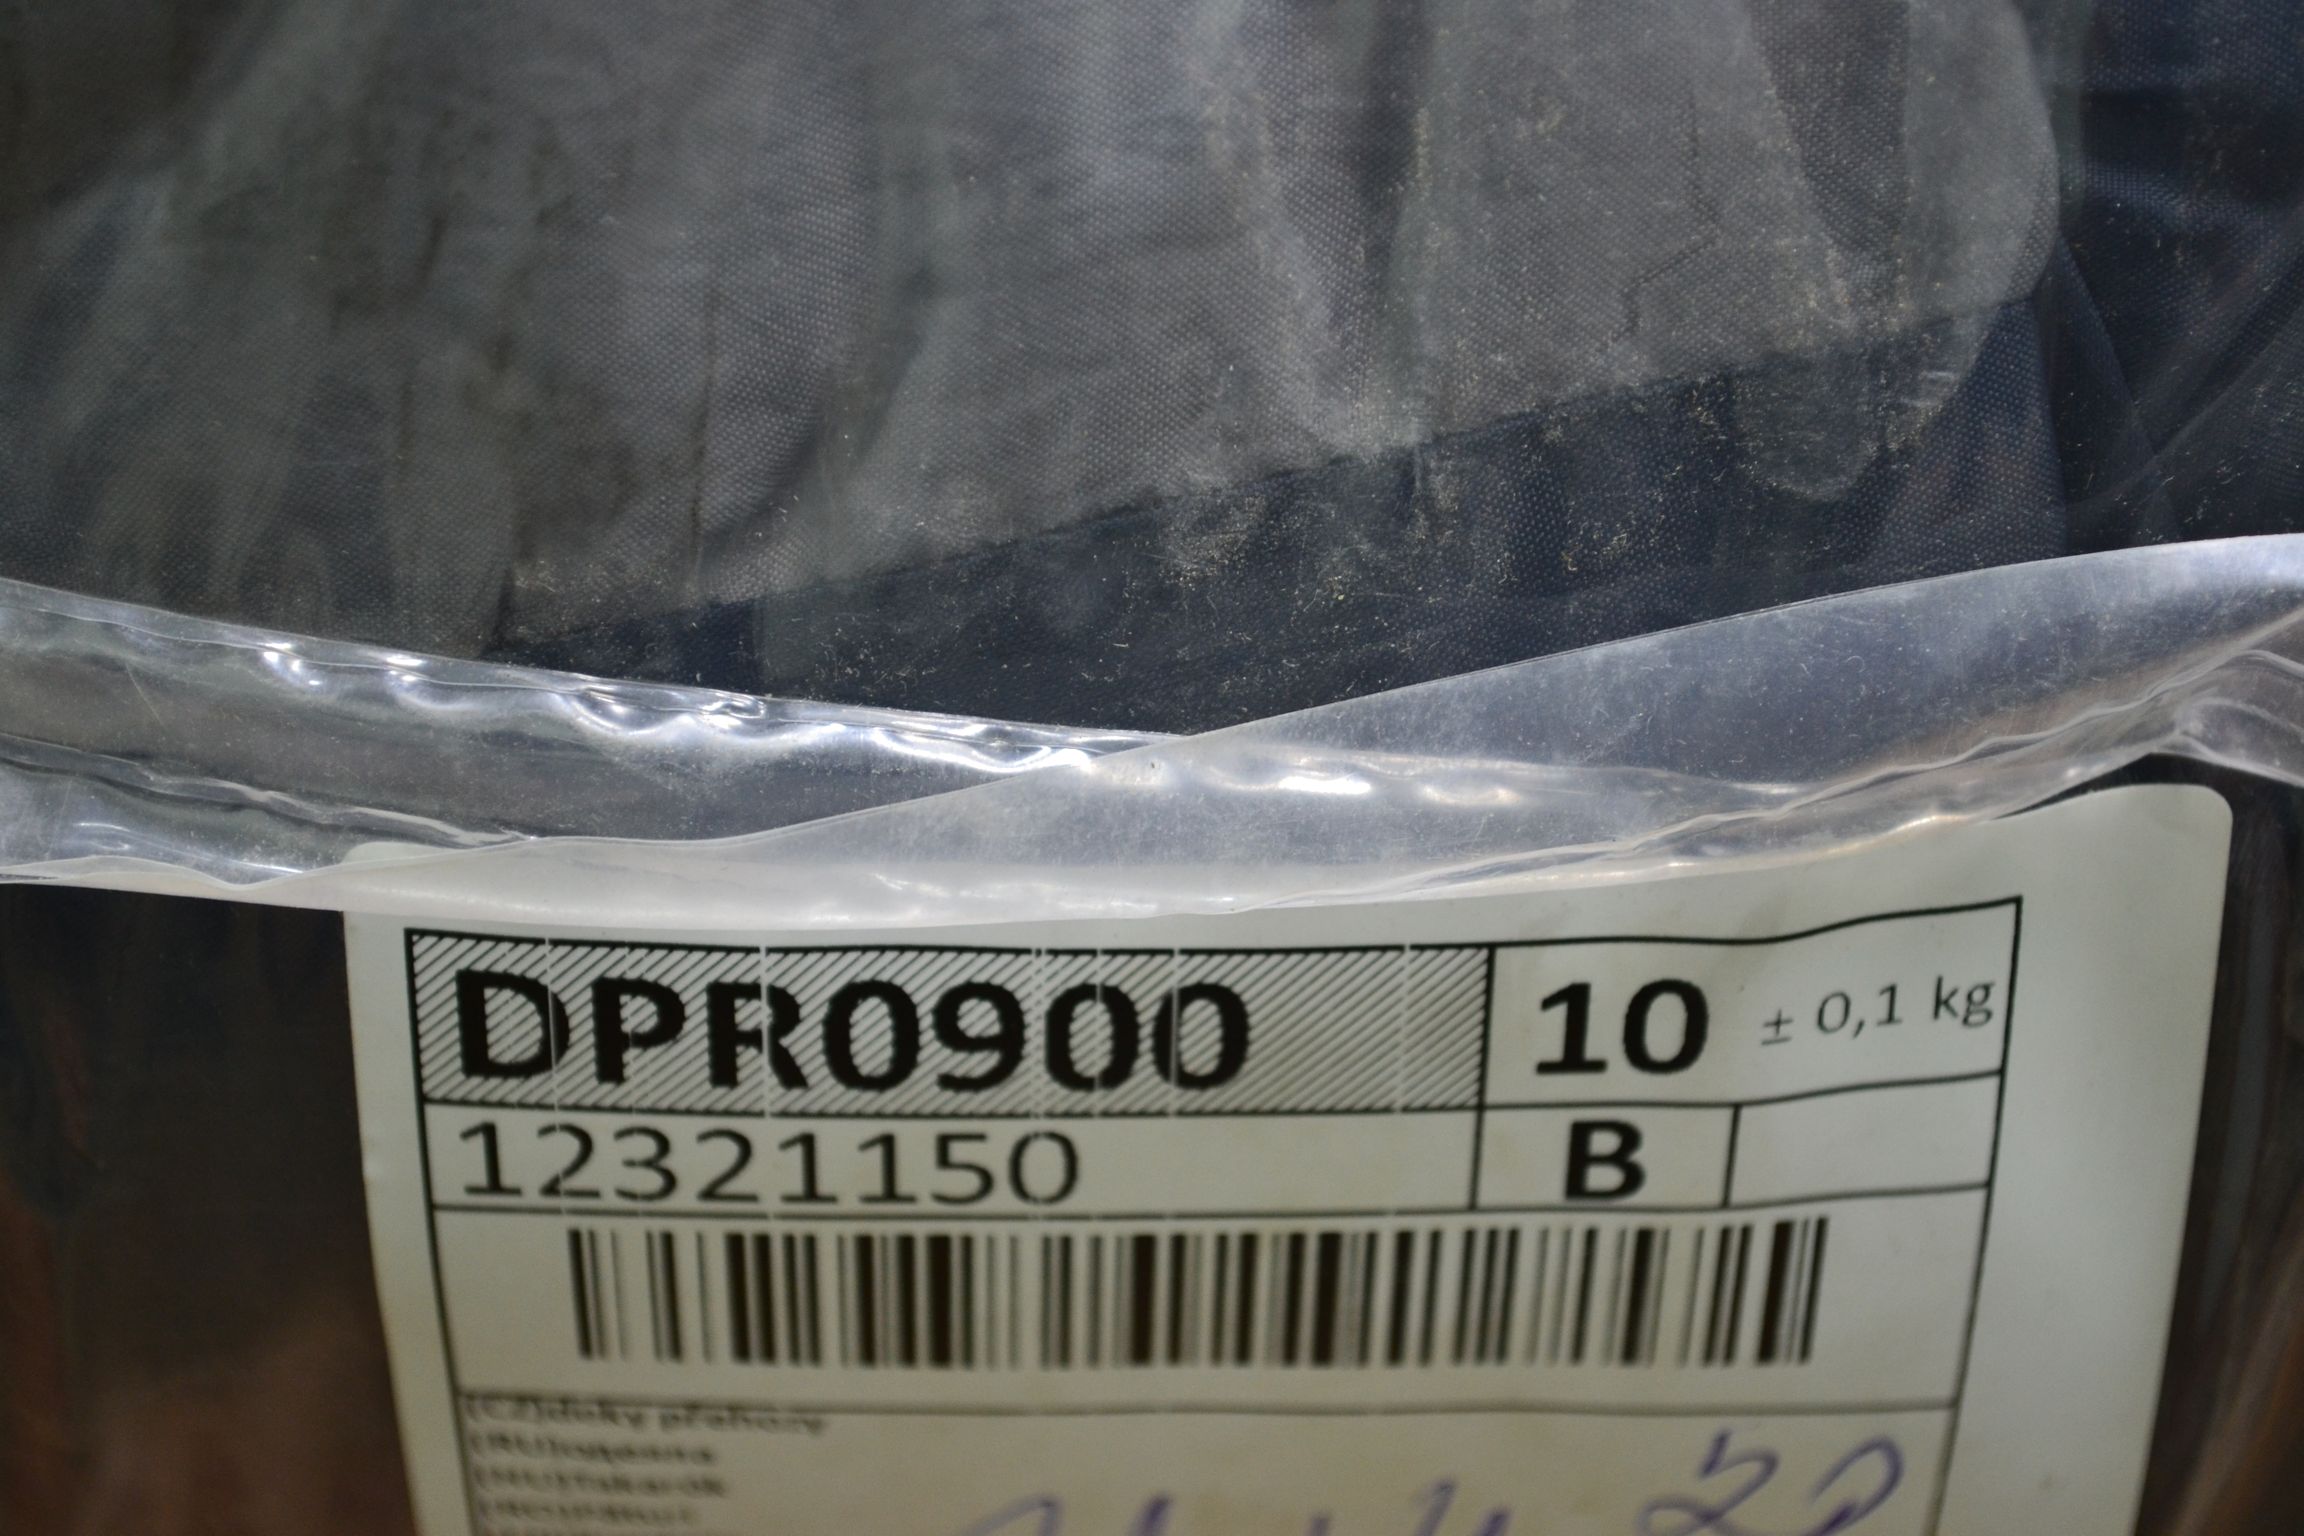 DPR0900 Одеяла, покрывала, пледы; код мешка 12321150